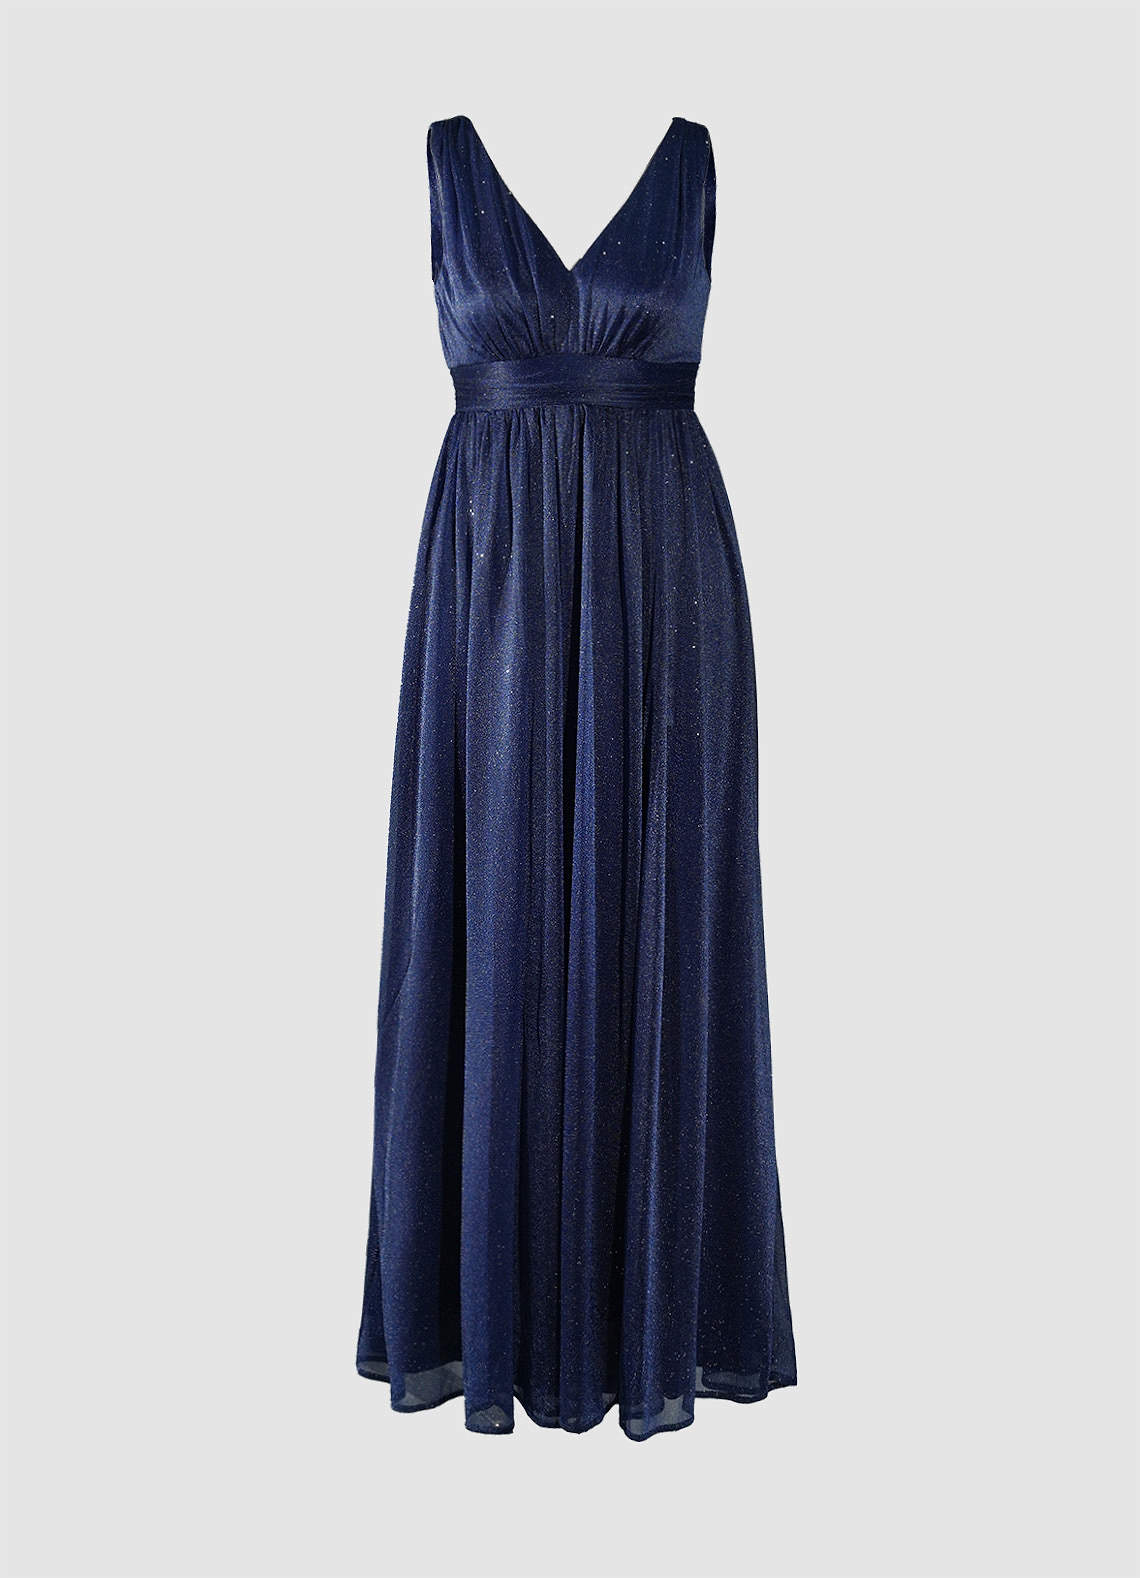 Navy Blue Sparkly Darling Navy Blue Sequin Maxi Dress